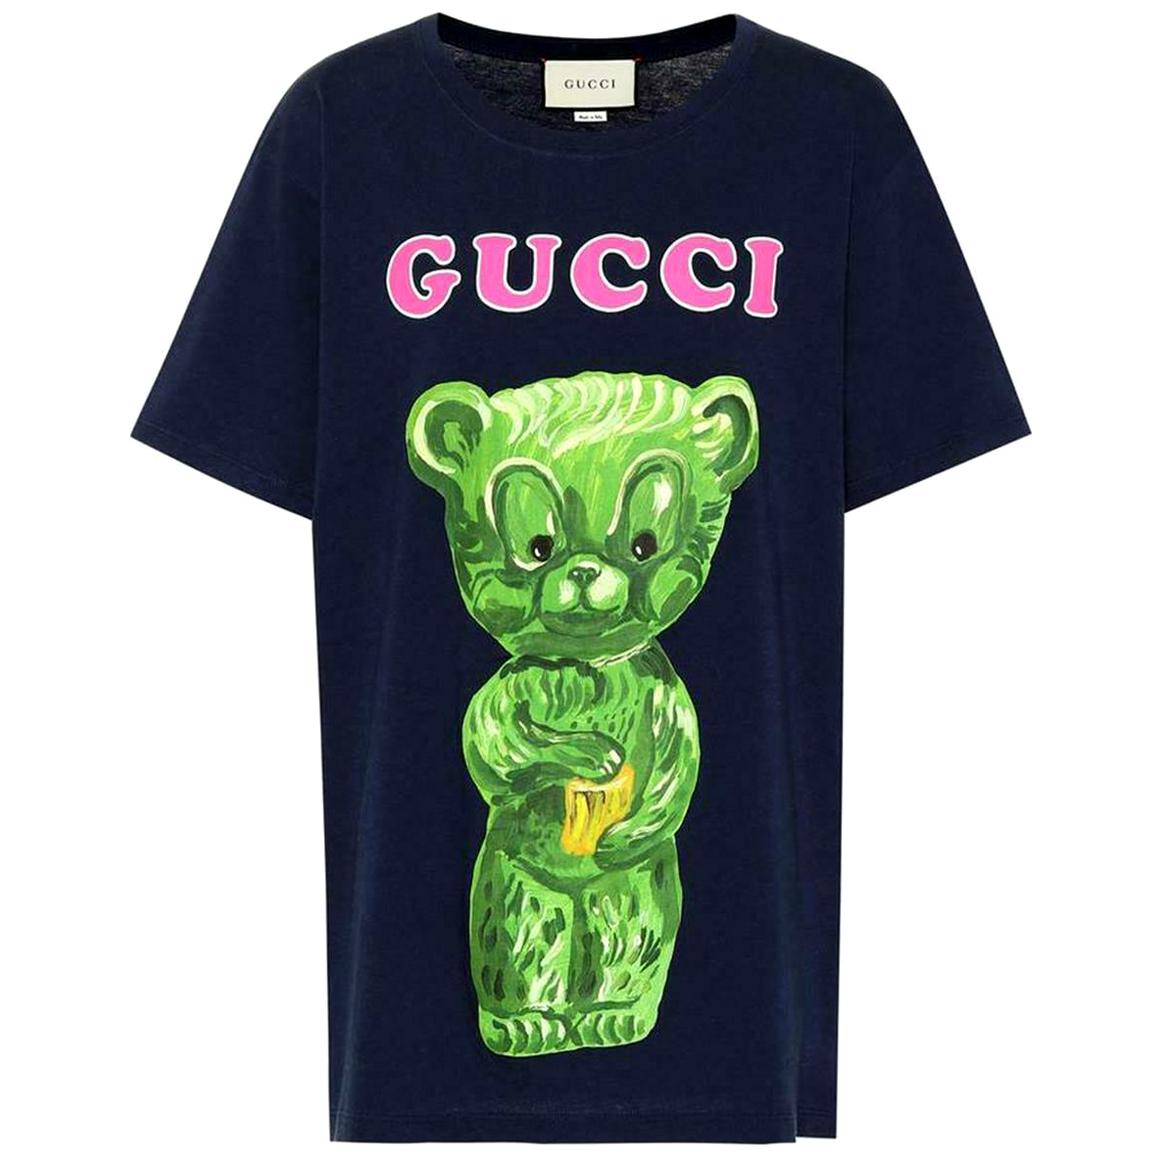 Gucci Printed Cotton Jersey T-Shirt